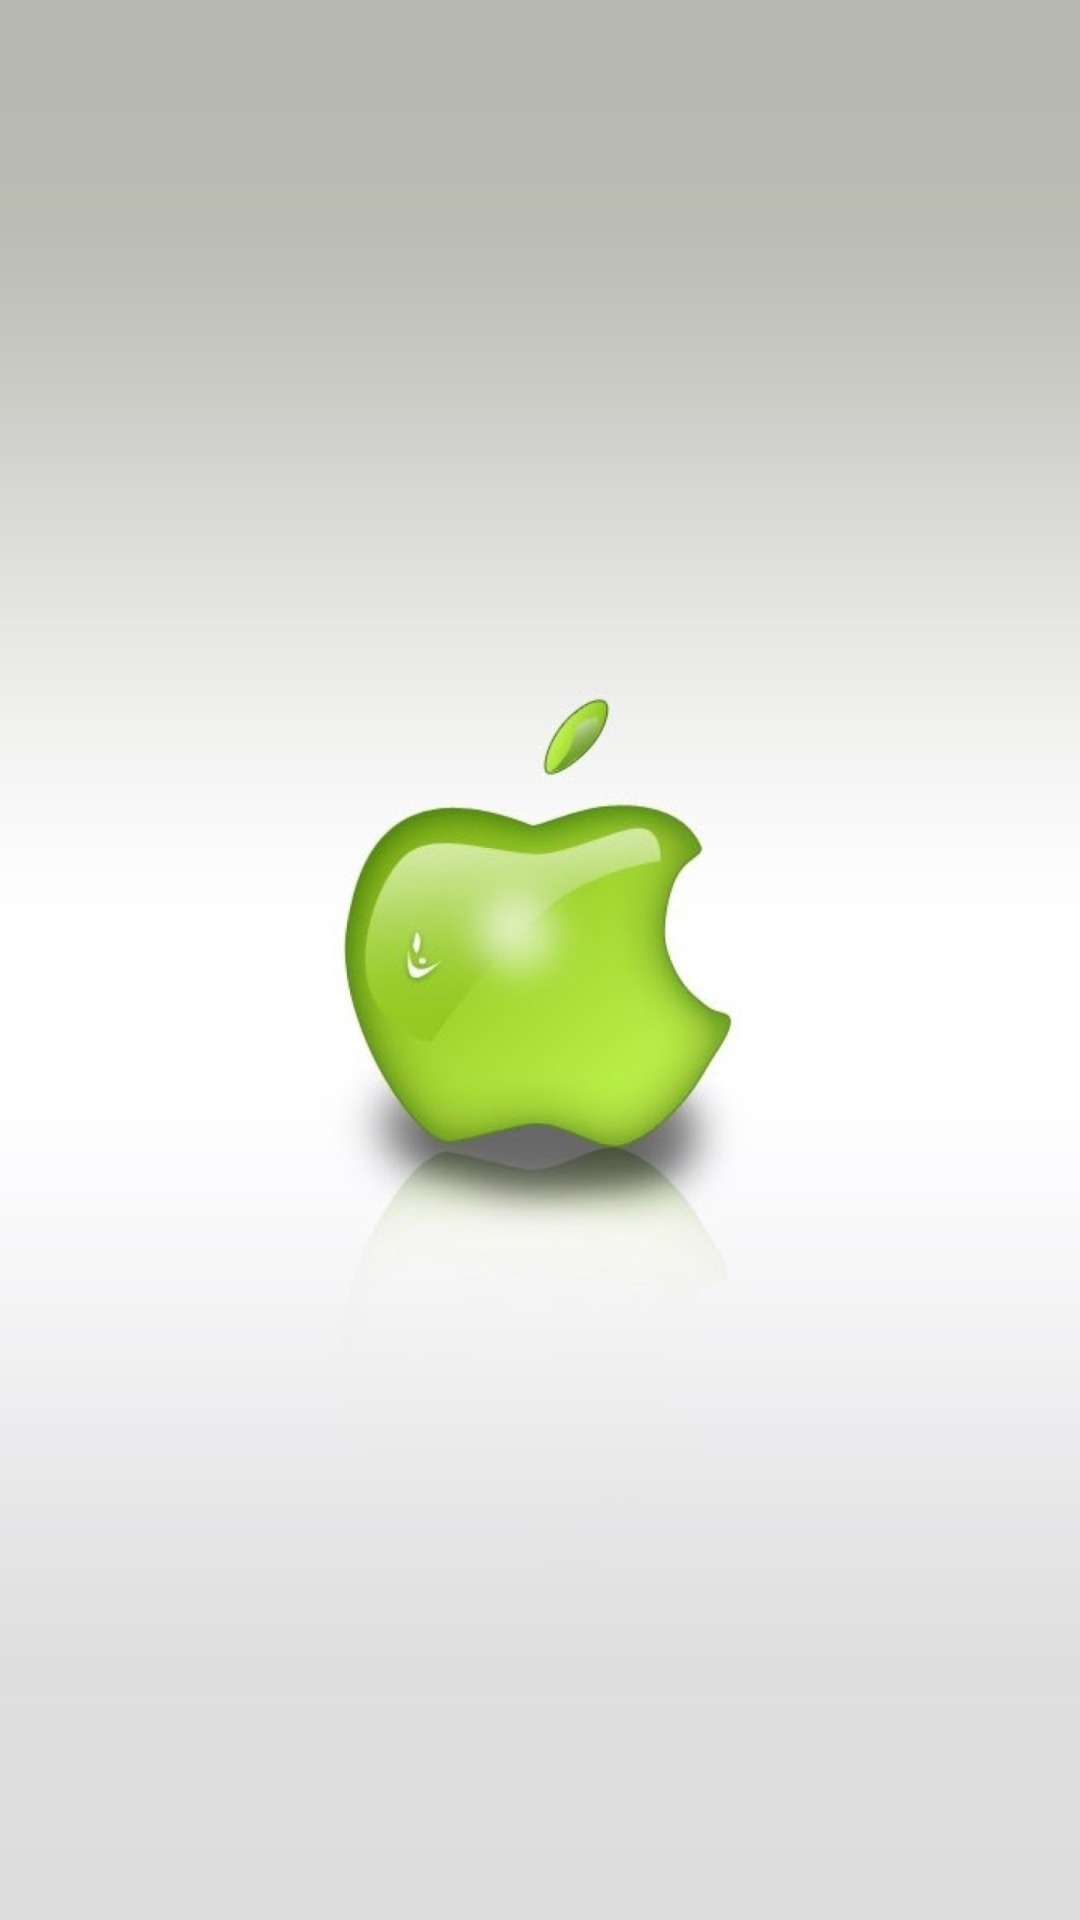 Apple Logo HD Wallpaper for Iphone 